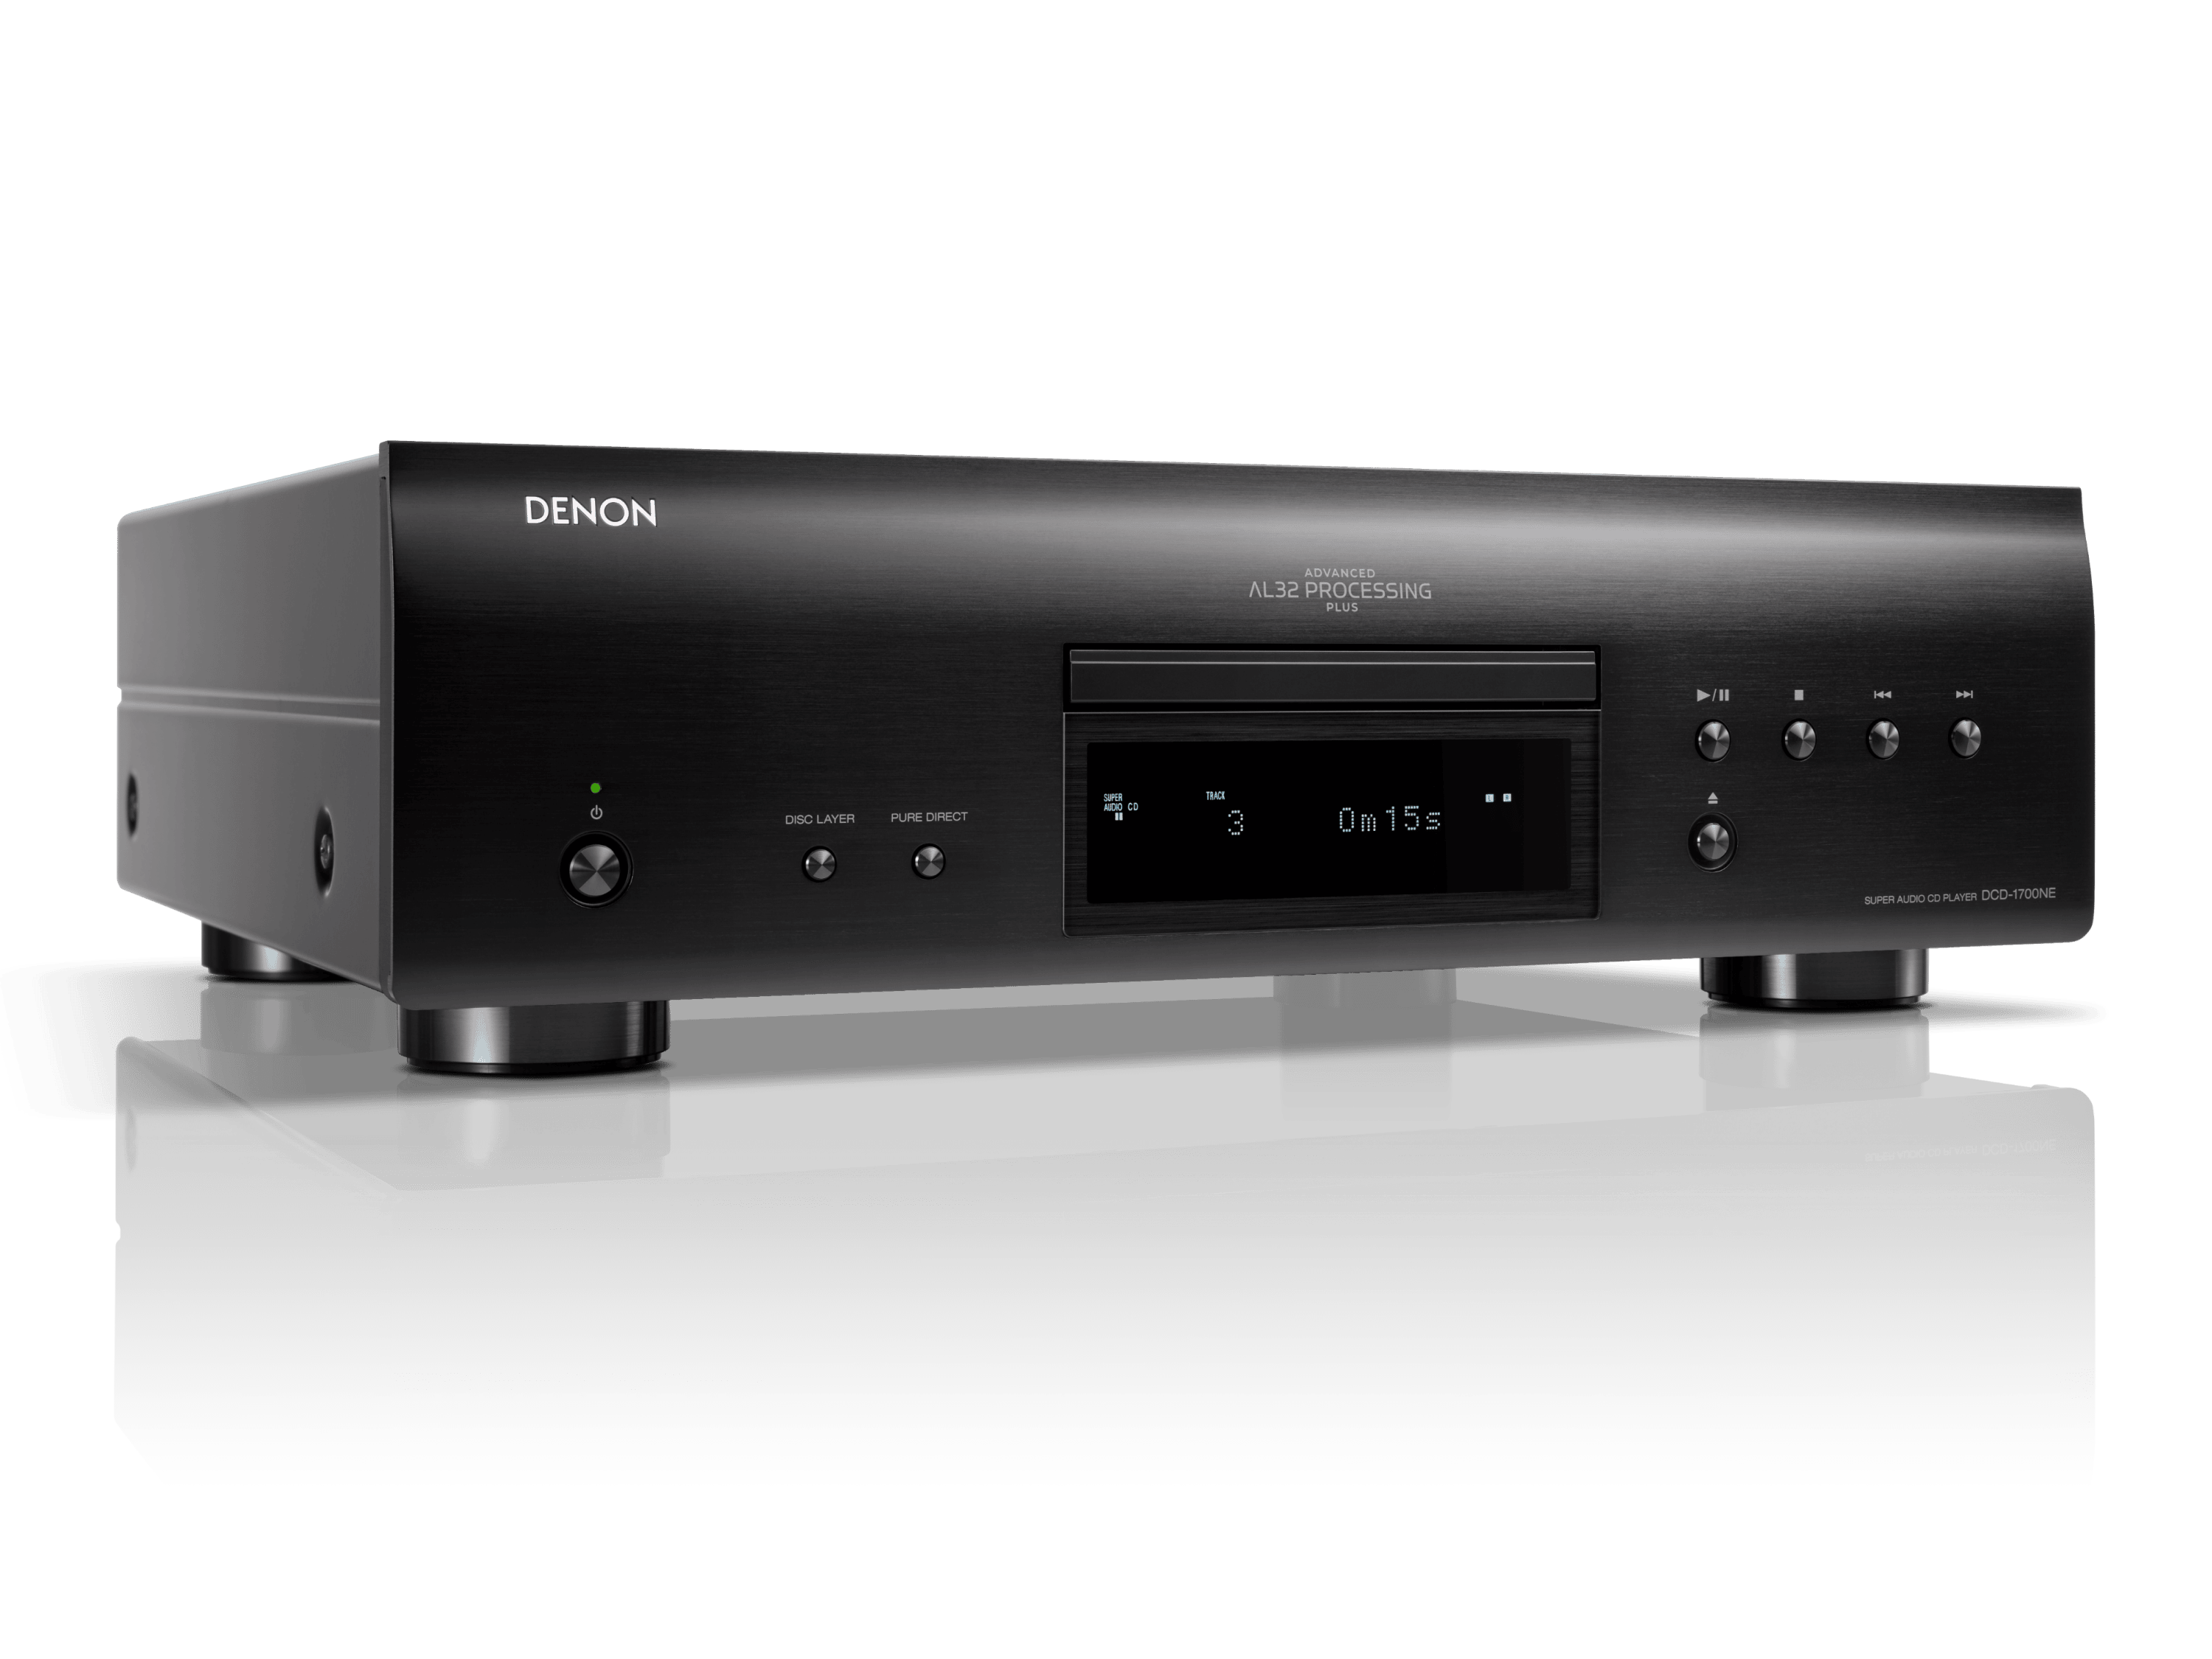 DCD-1700NE - CD/SACD-Player mit DCD-1700NE Processing | Denon - Advanced Plus AL32 Europe